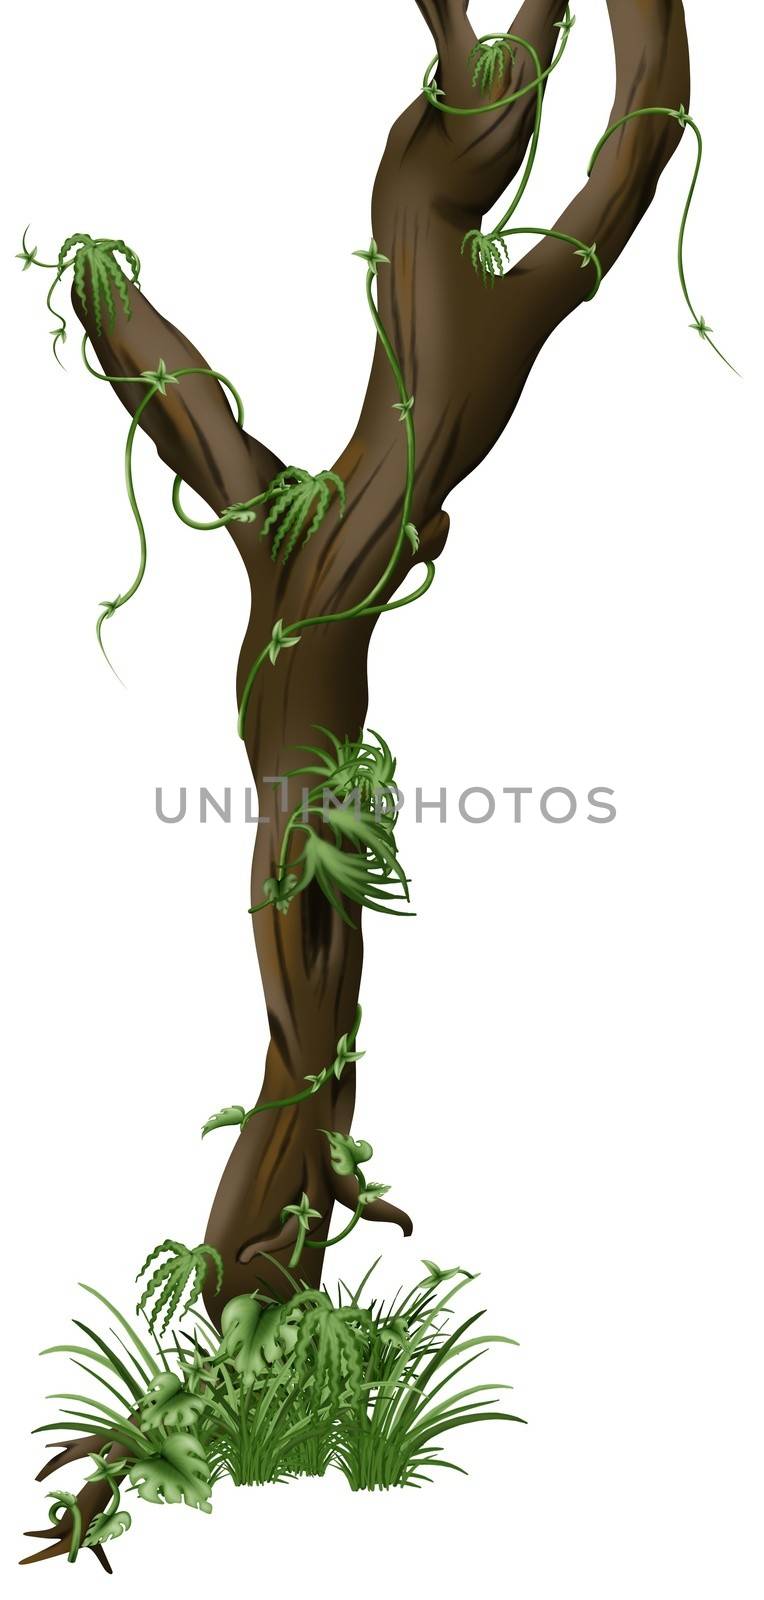 Trunk Tree and Creeping Plants - illustration